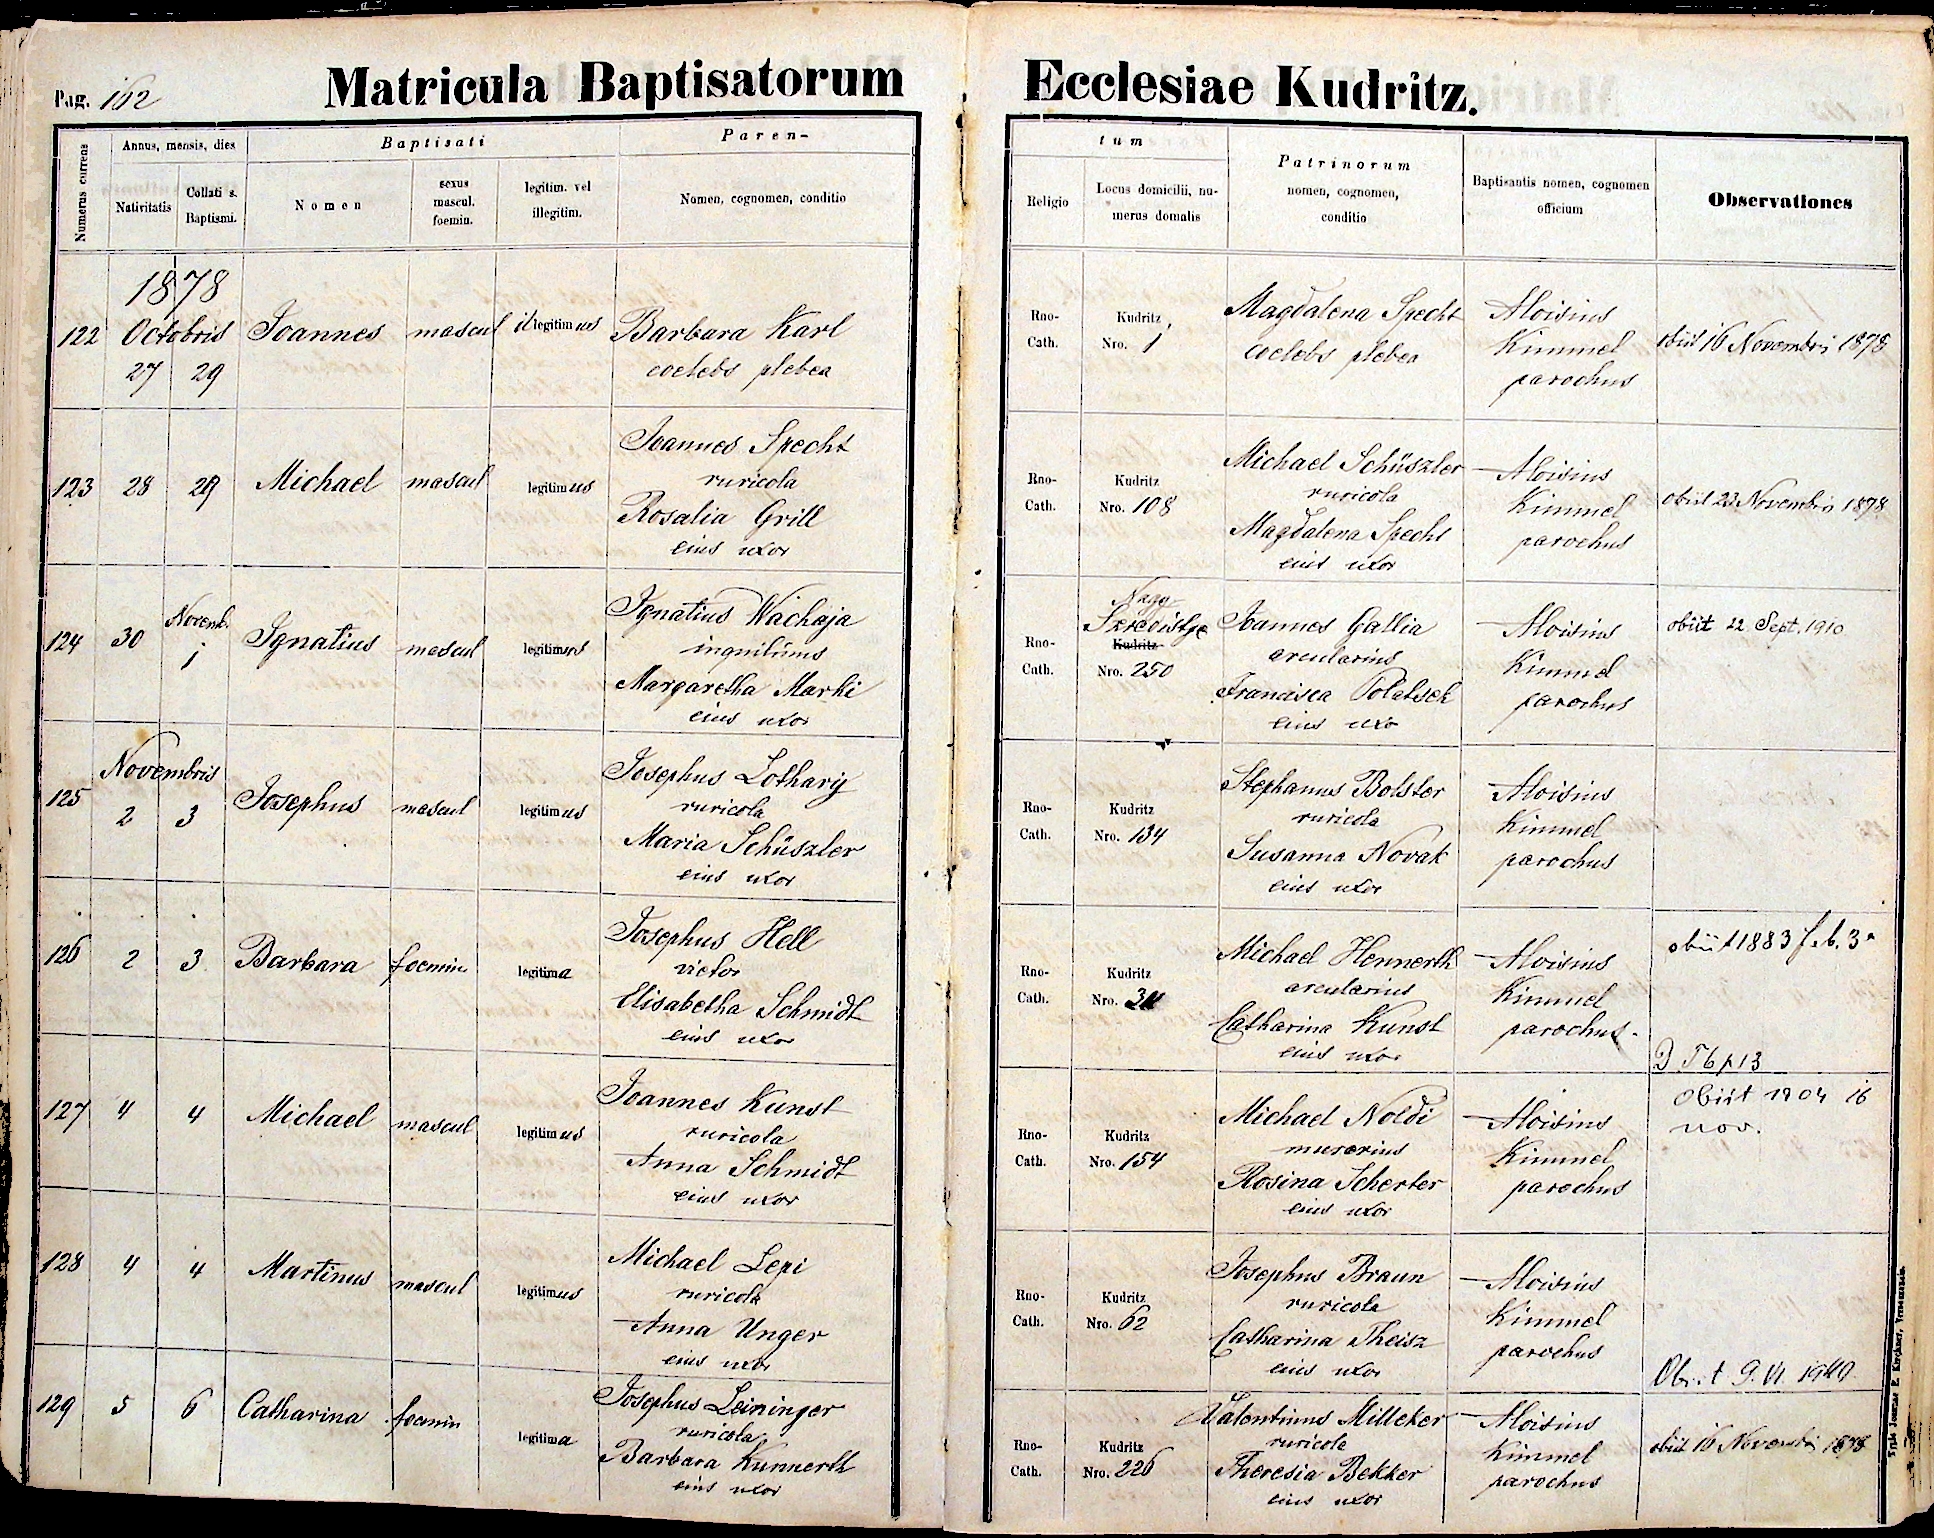 images/church_records/BIRTHS/1884-1899B/1894/162